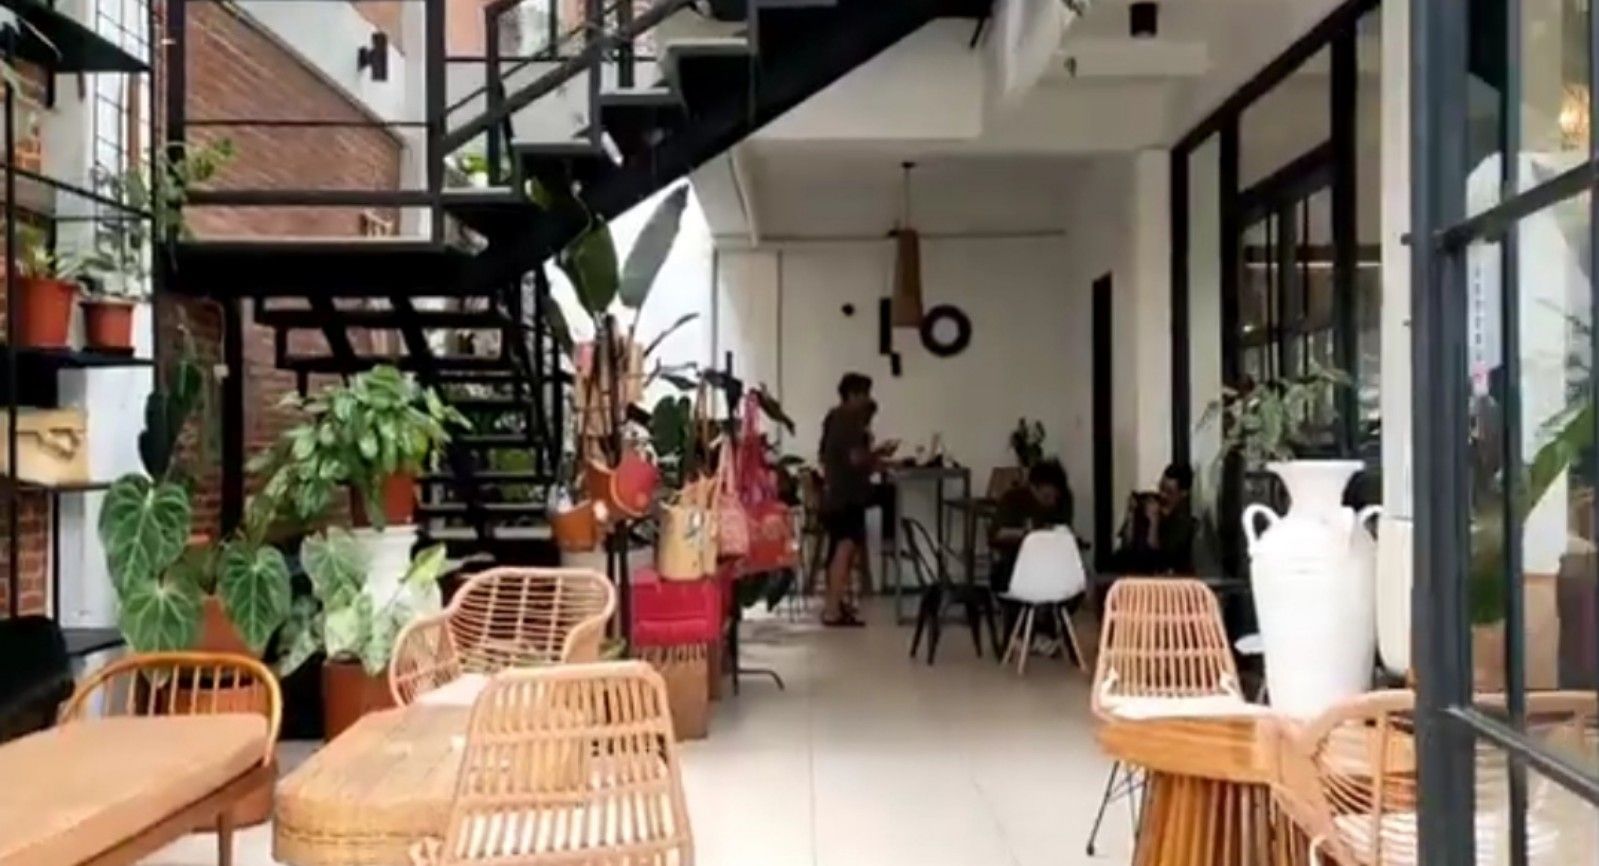 Ayoola Coffee, resto dan cafe cozy Instagramable di Bintaro tangerang Selatan Banten/tangkapan layar youtube/Edivayunda Channel 